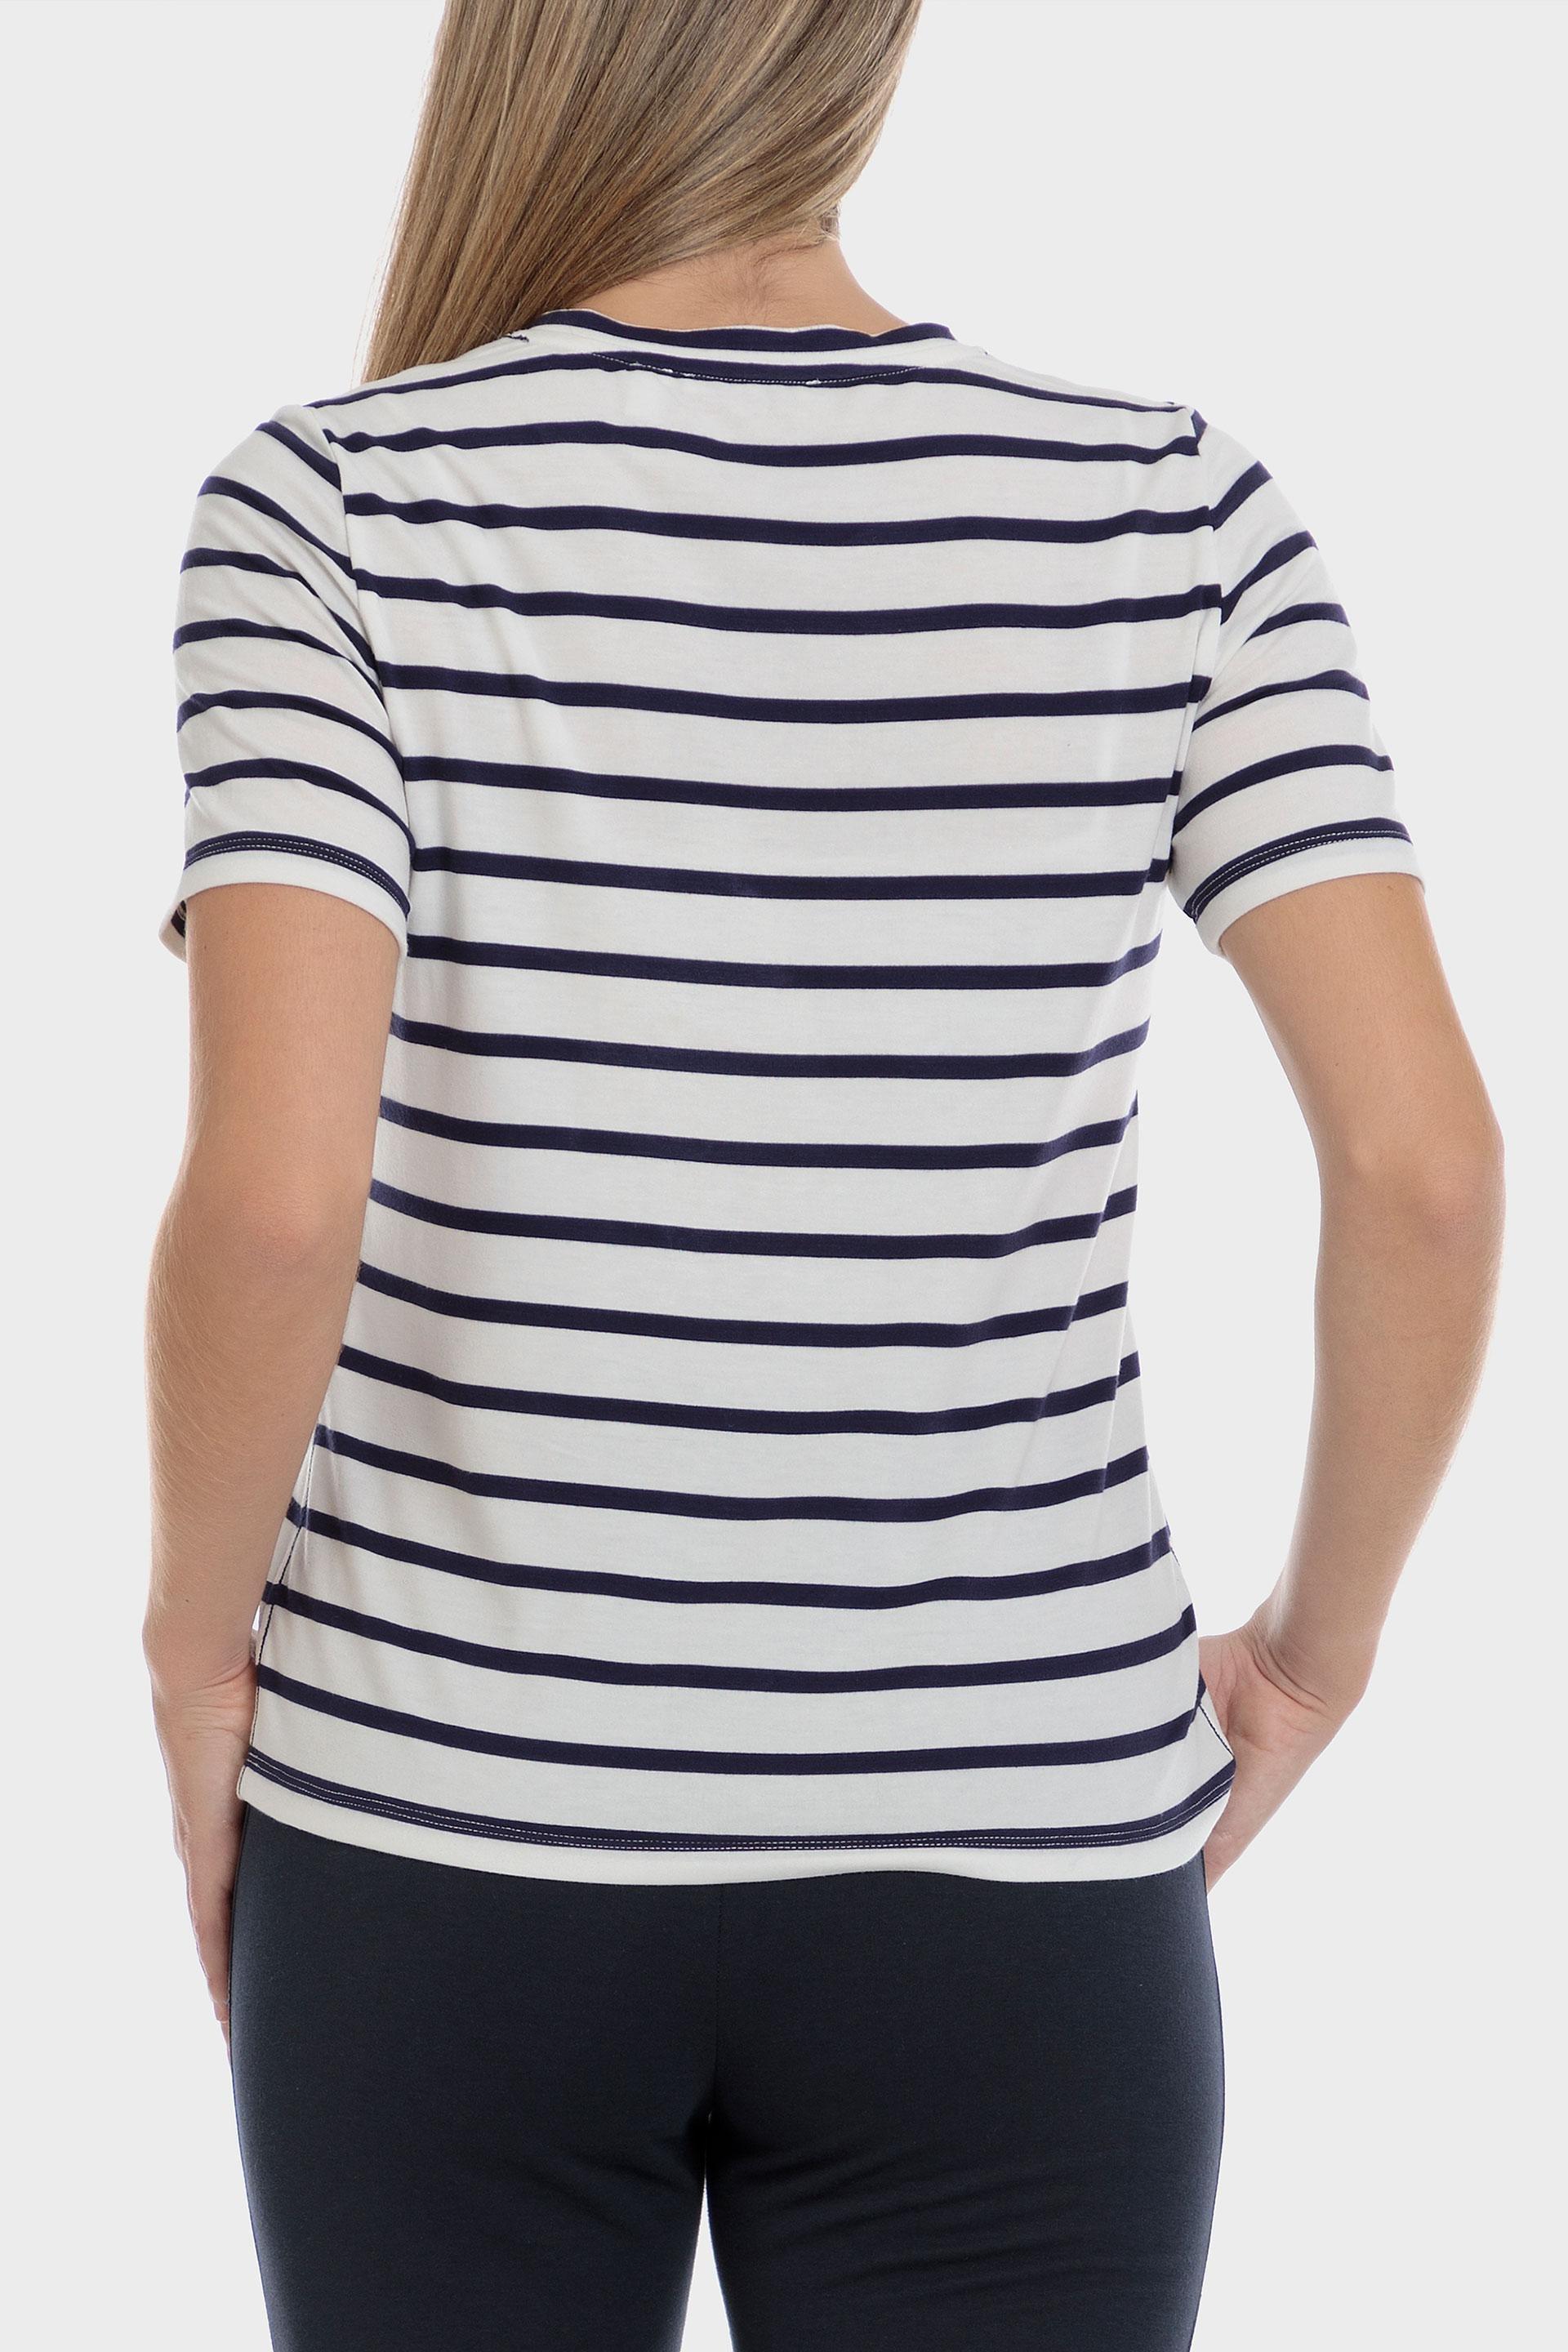 Punt Roma - Multicolour Striped T-Shirt